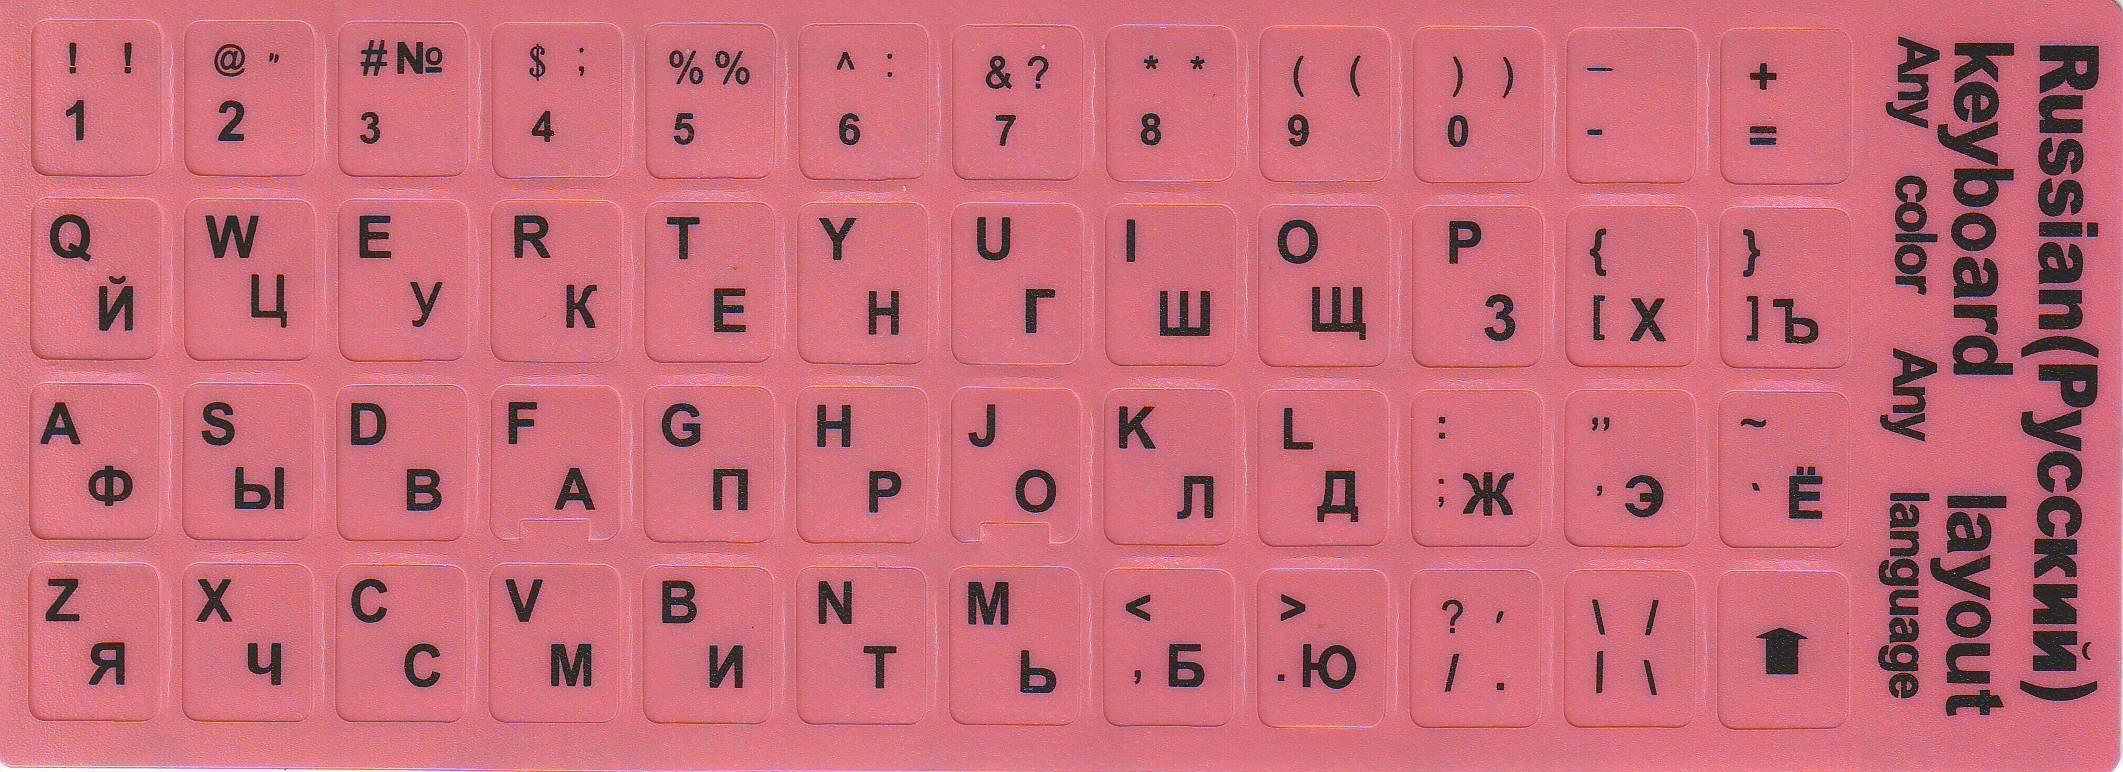 Красивый шрифт для клавиатуры. Клавиатура буквы. Наклейки буквы на клавиатуру. Русские буквы на клавиатуру. Клавиатура с русскими буквами.